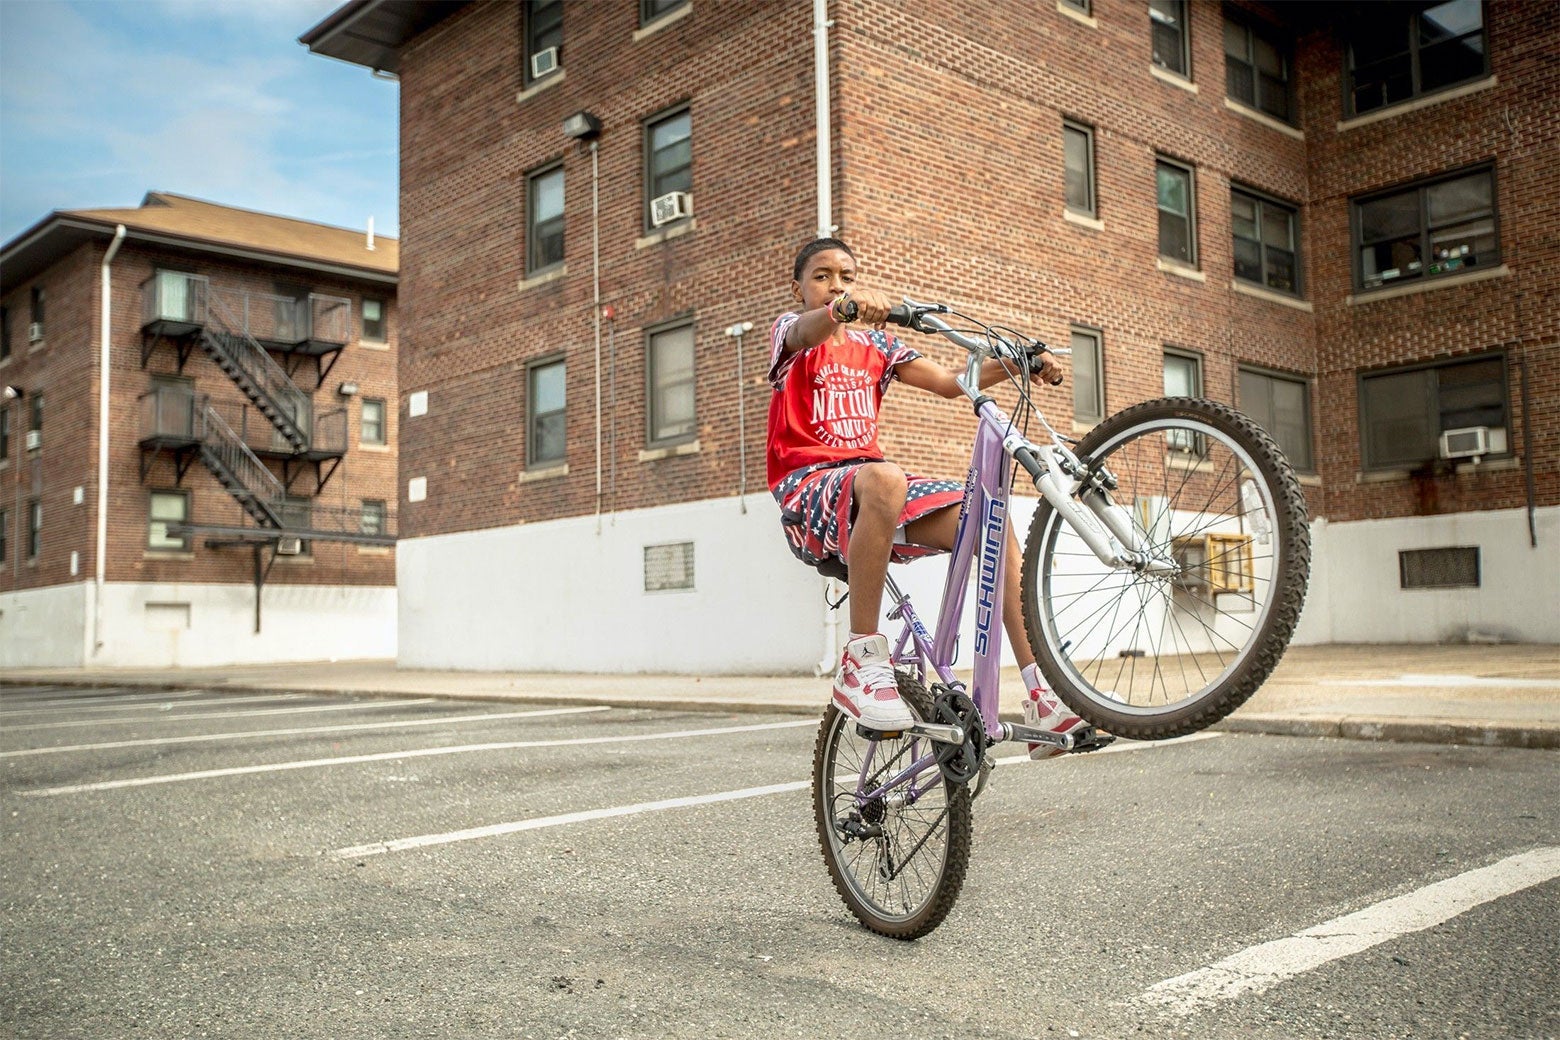 A boy rides his bike on an apartment parking lot.